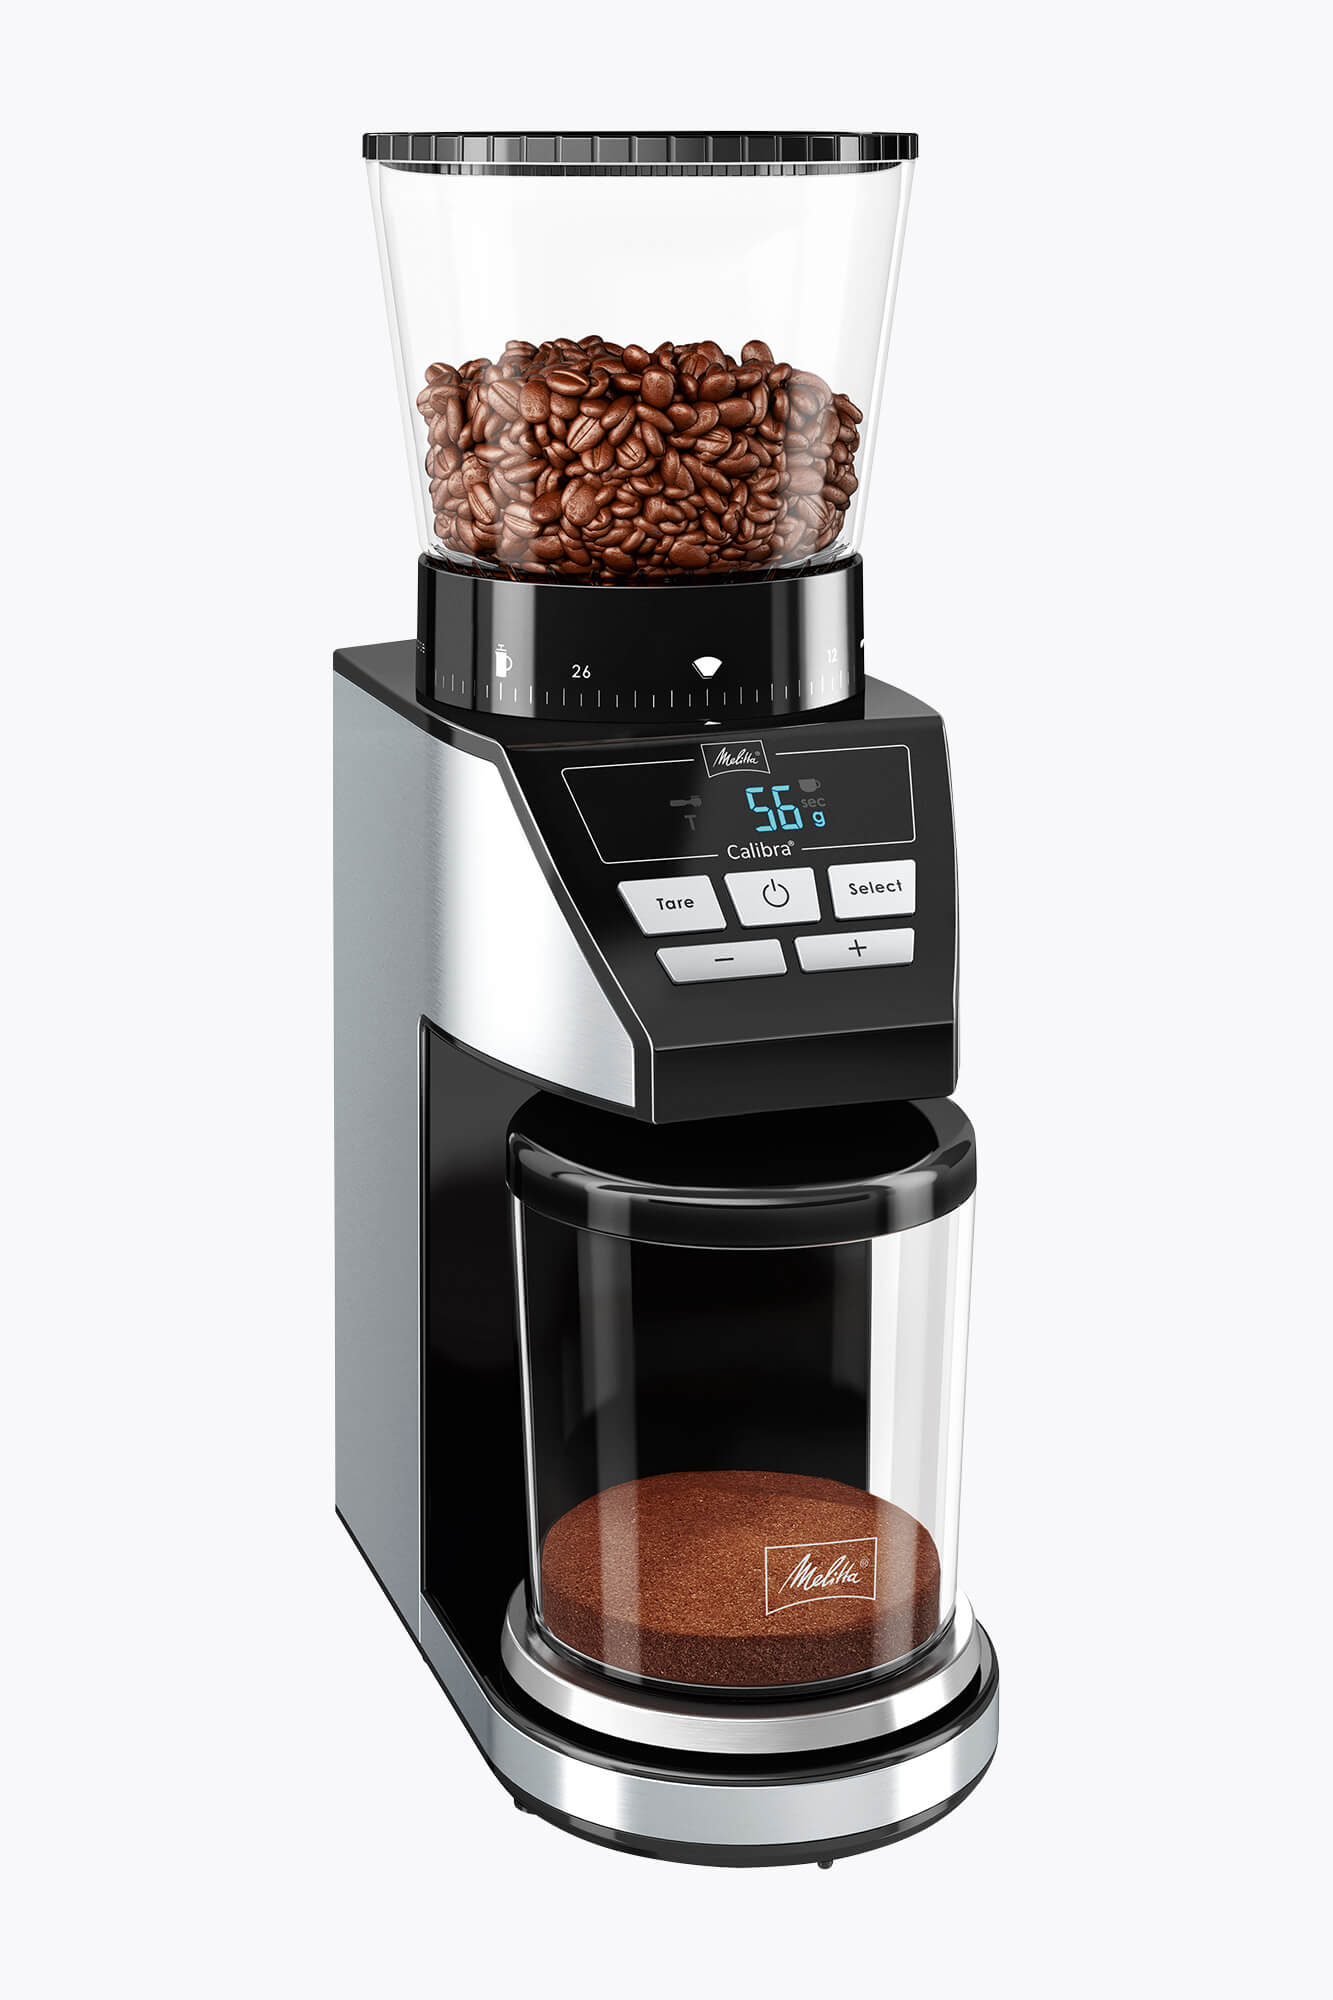 roastmarket.de | Melitta® Calibra electric coffee grinder 1027-01 black stainless steel